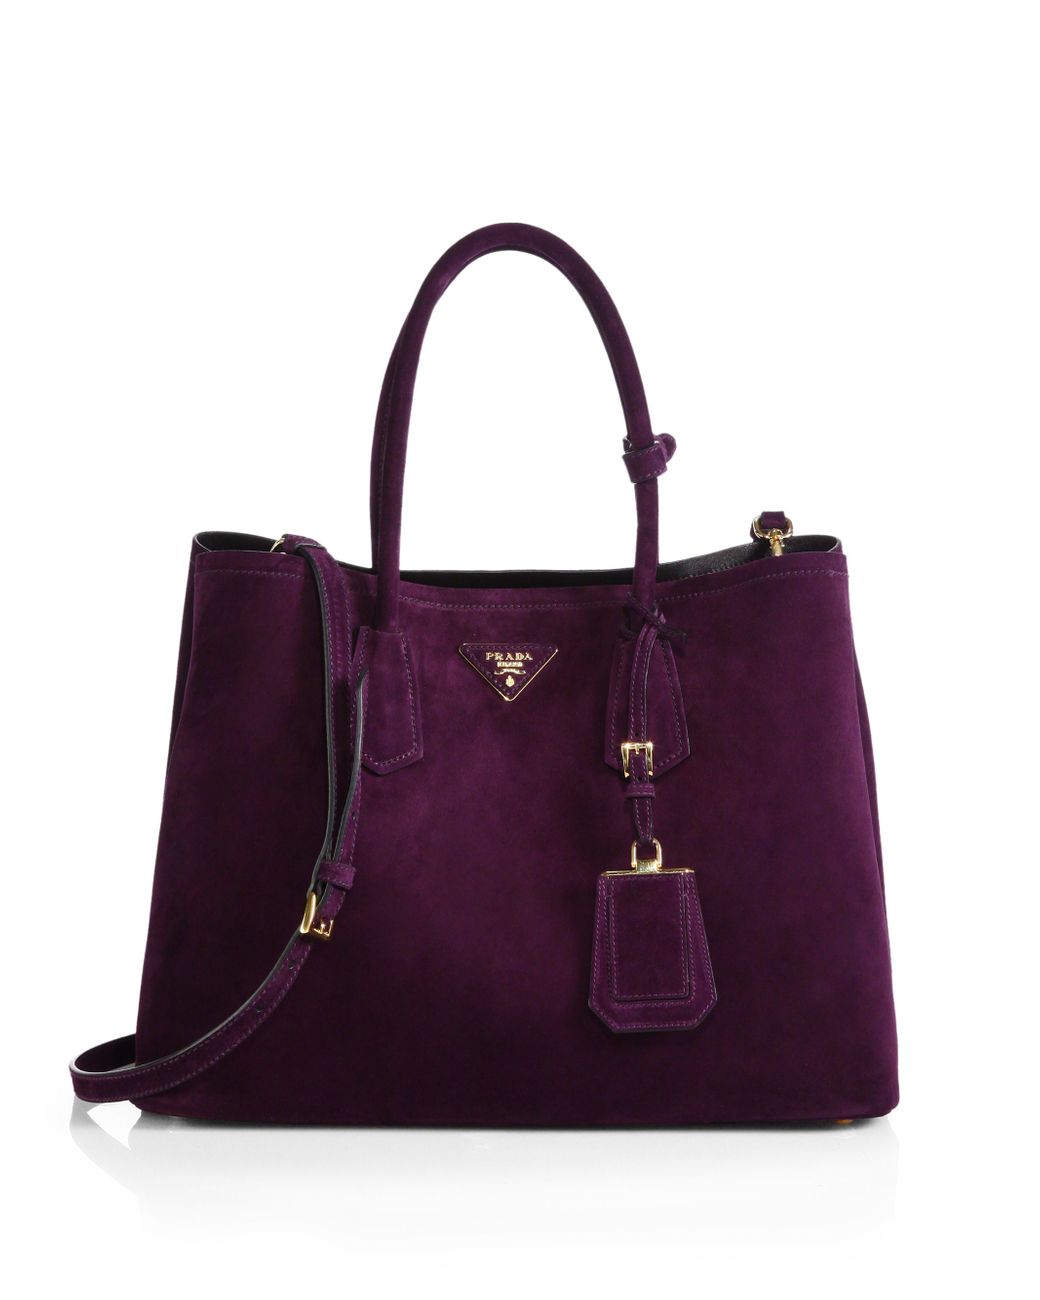 Prada Suede Double Bag in Purple